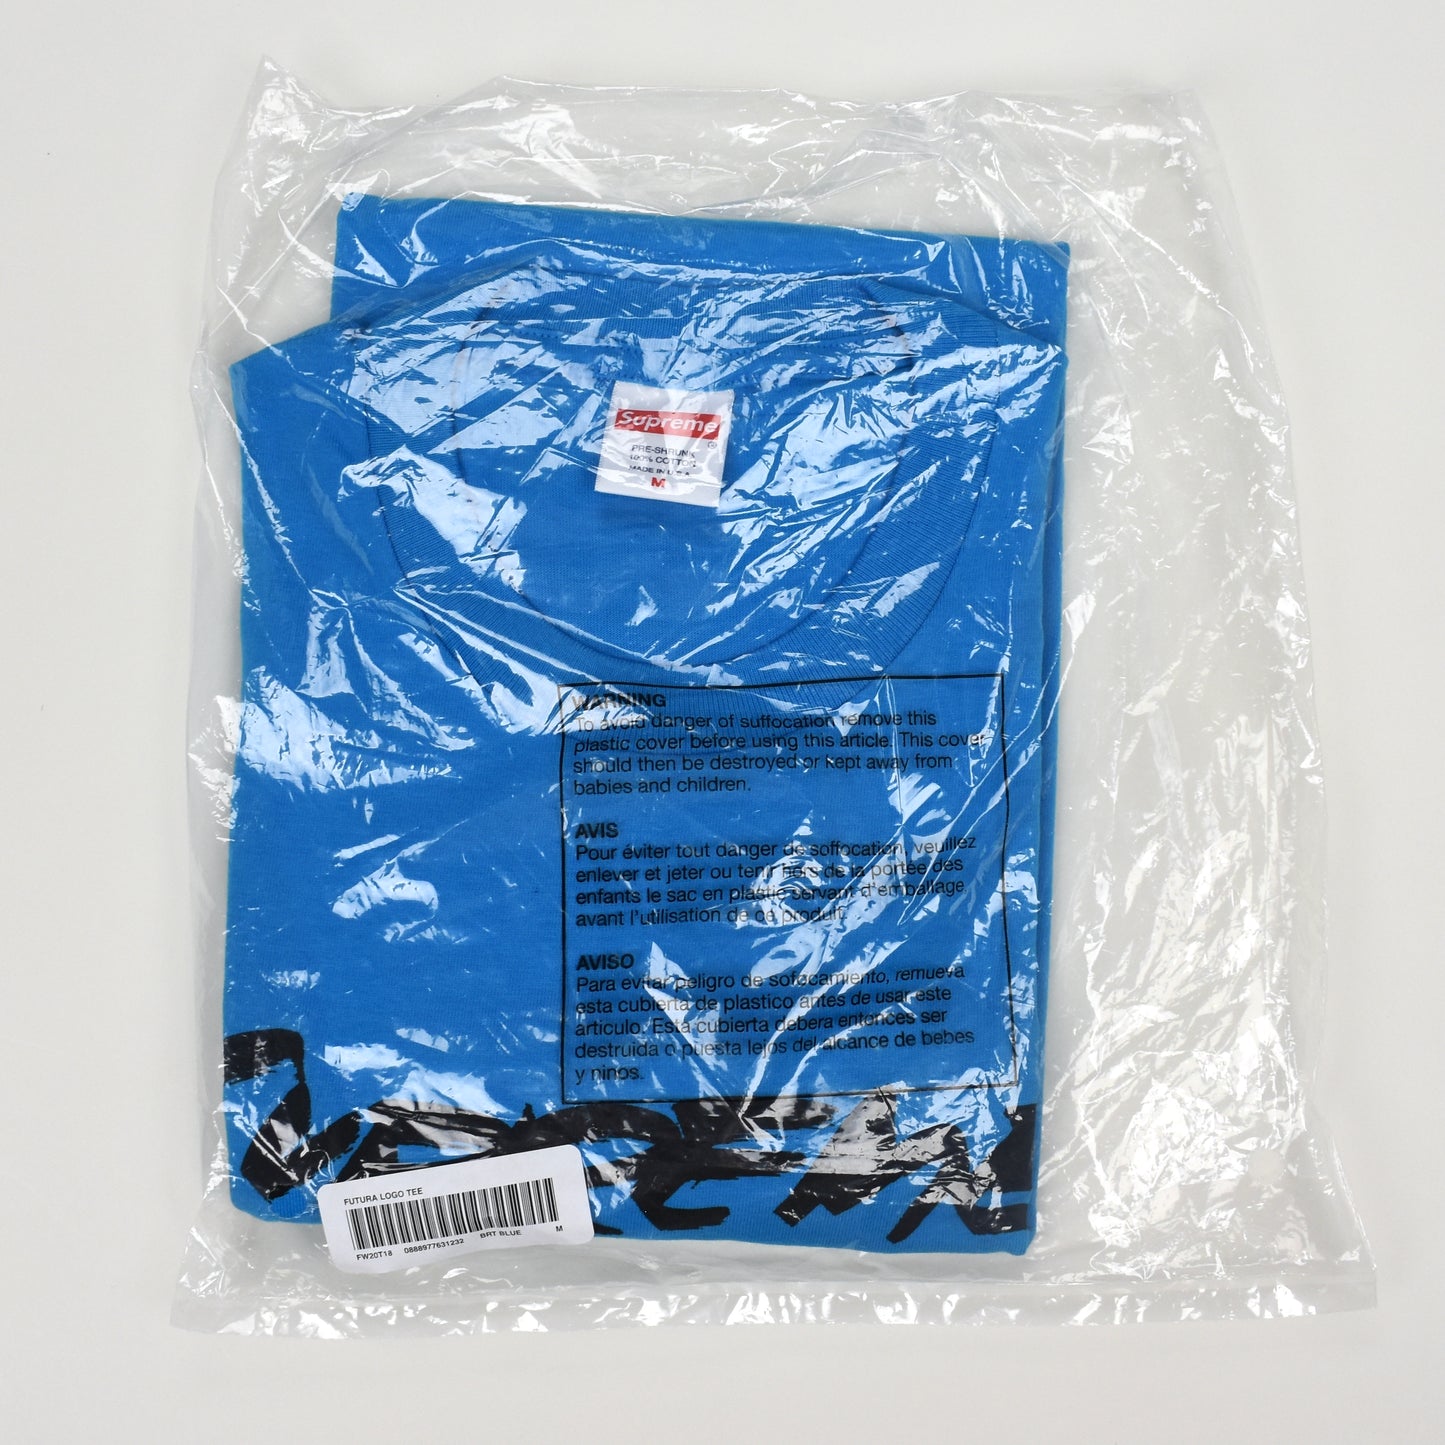 Supreme - Futura Logo T-Shirt (Bright Blue)